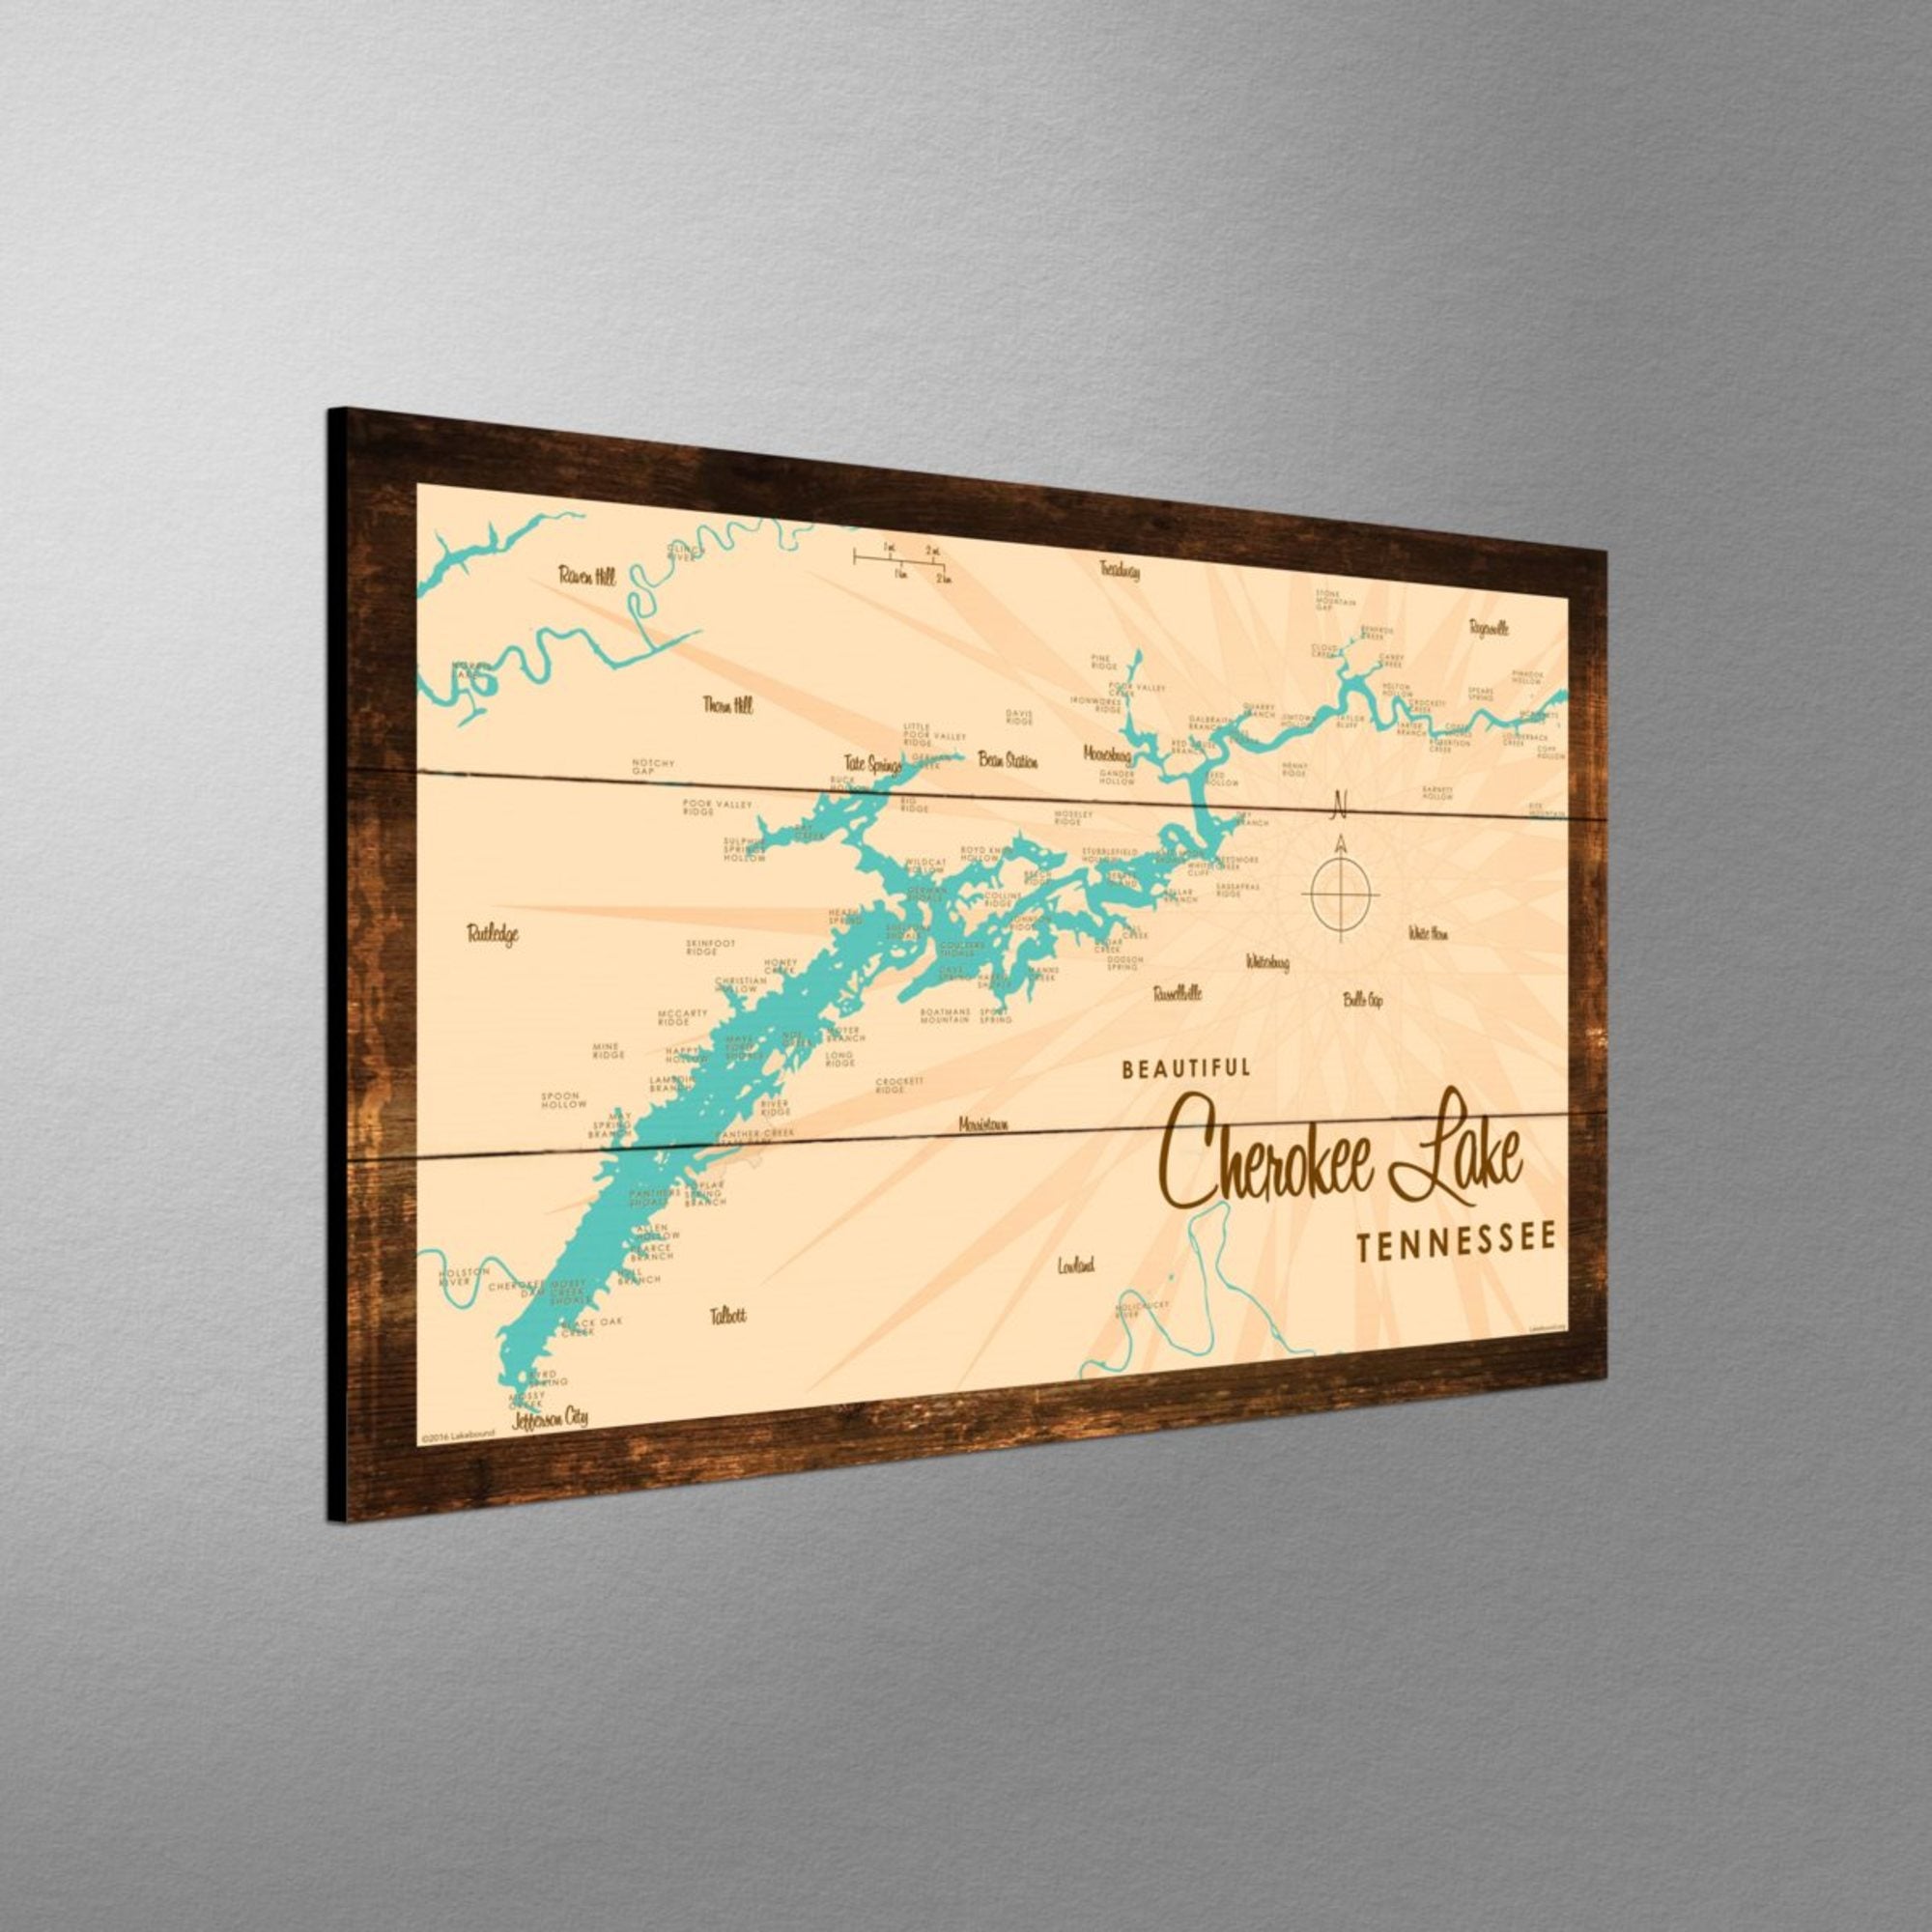 Cherokee Lake Tennessee, Rustic Wood Sign Map Art